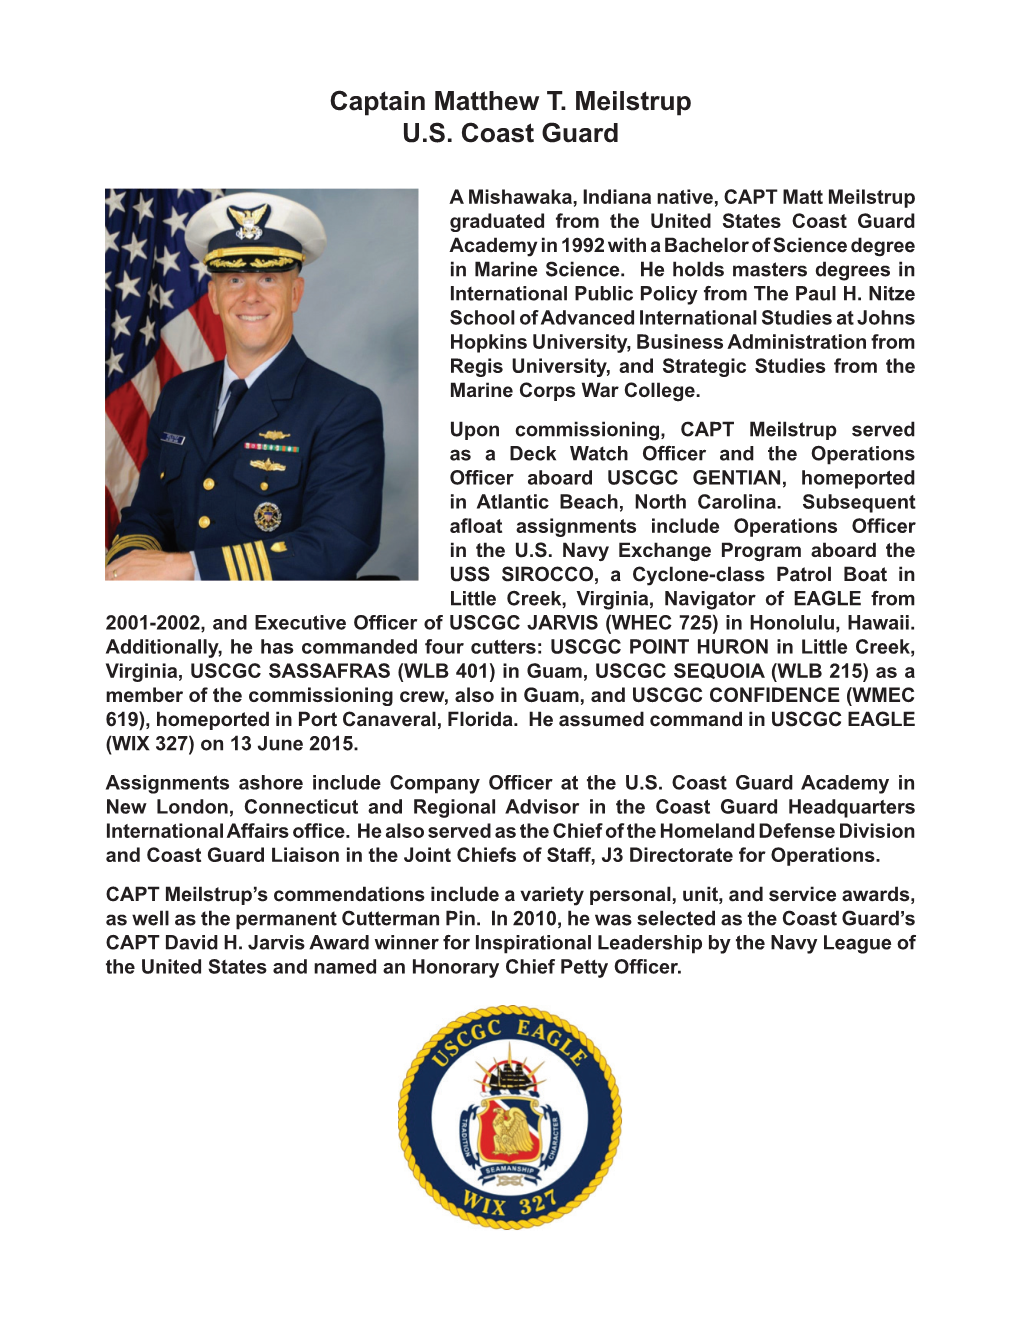 Captain Matthew T. Meilstrup U.S. Coast Guard